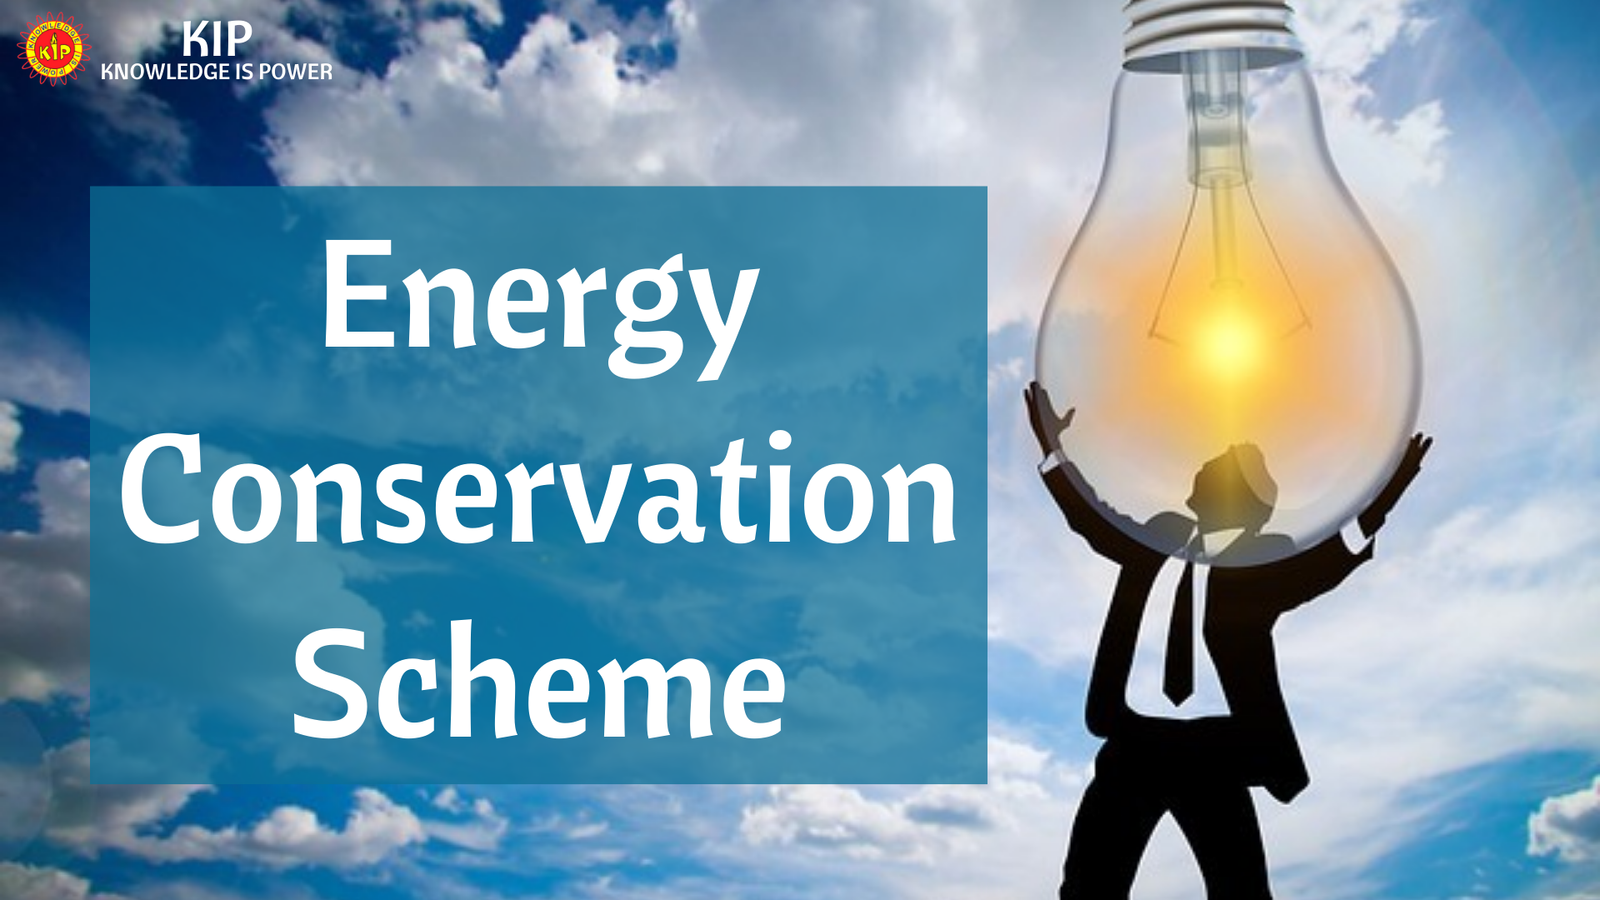 Energy conservation scheme